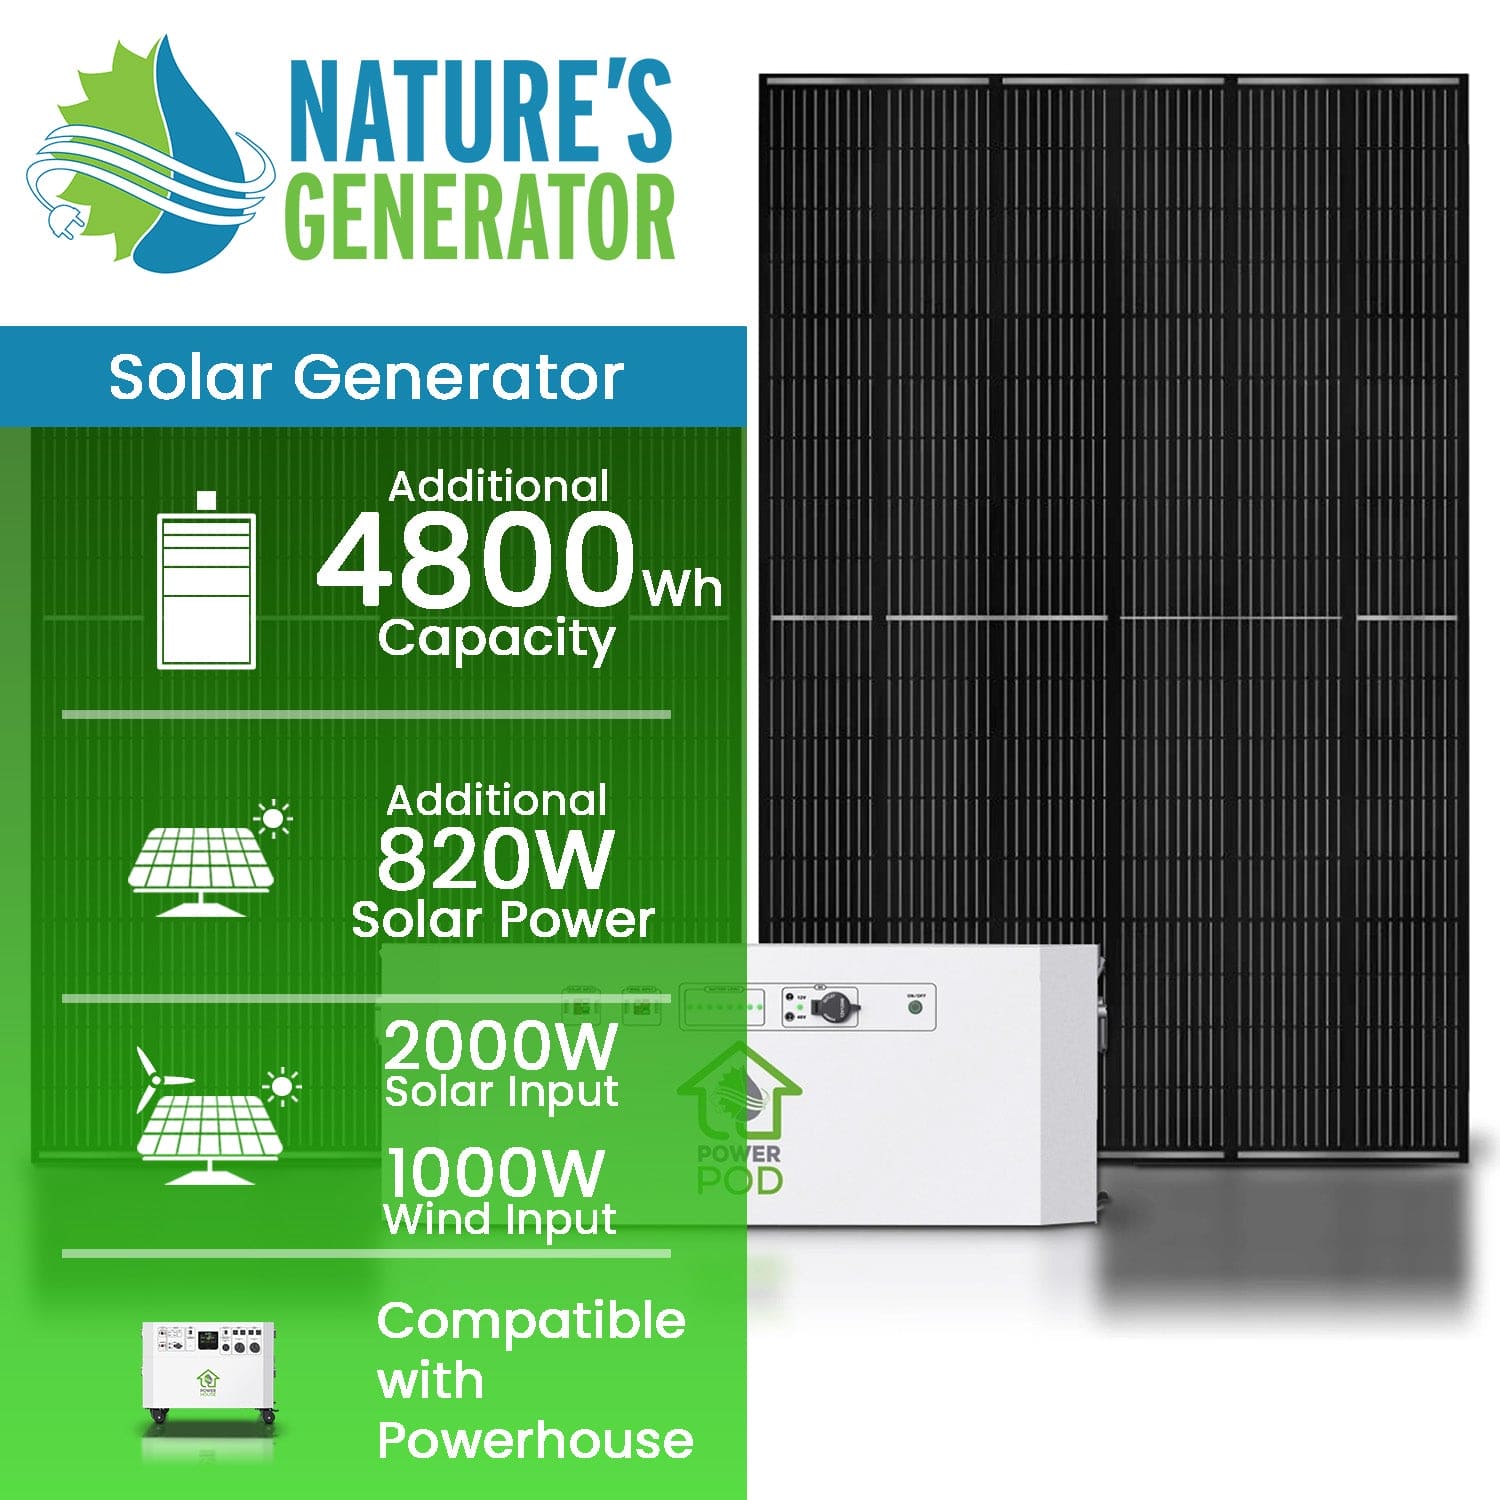 Nature’s Generator Powerhouse Power Addition - Nature's Generator